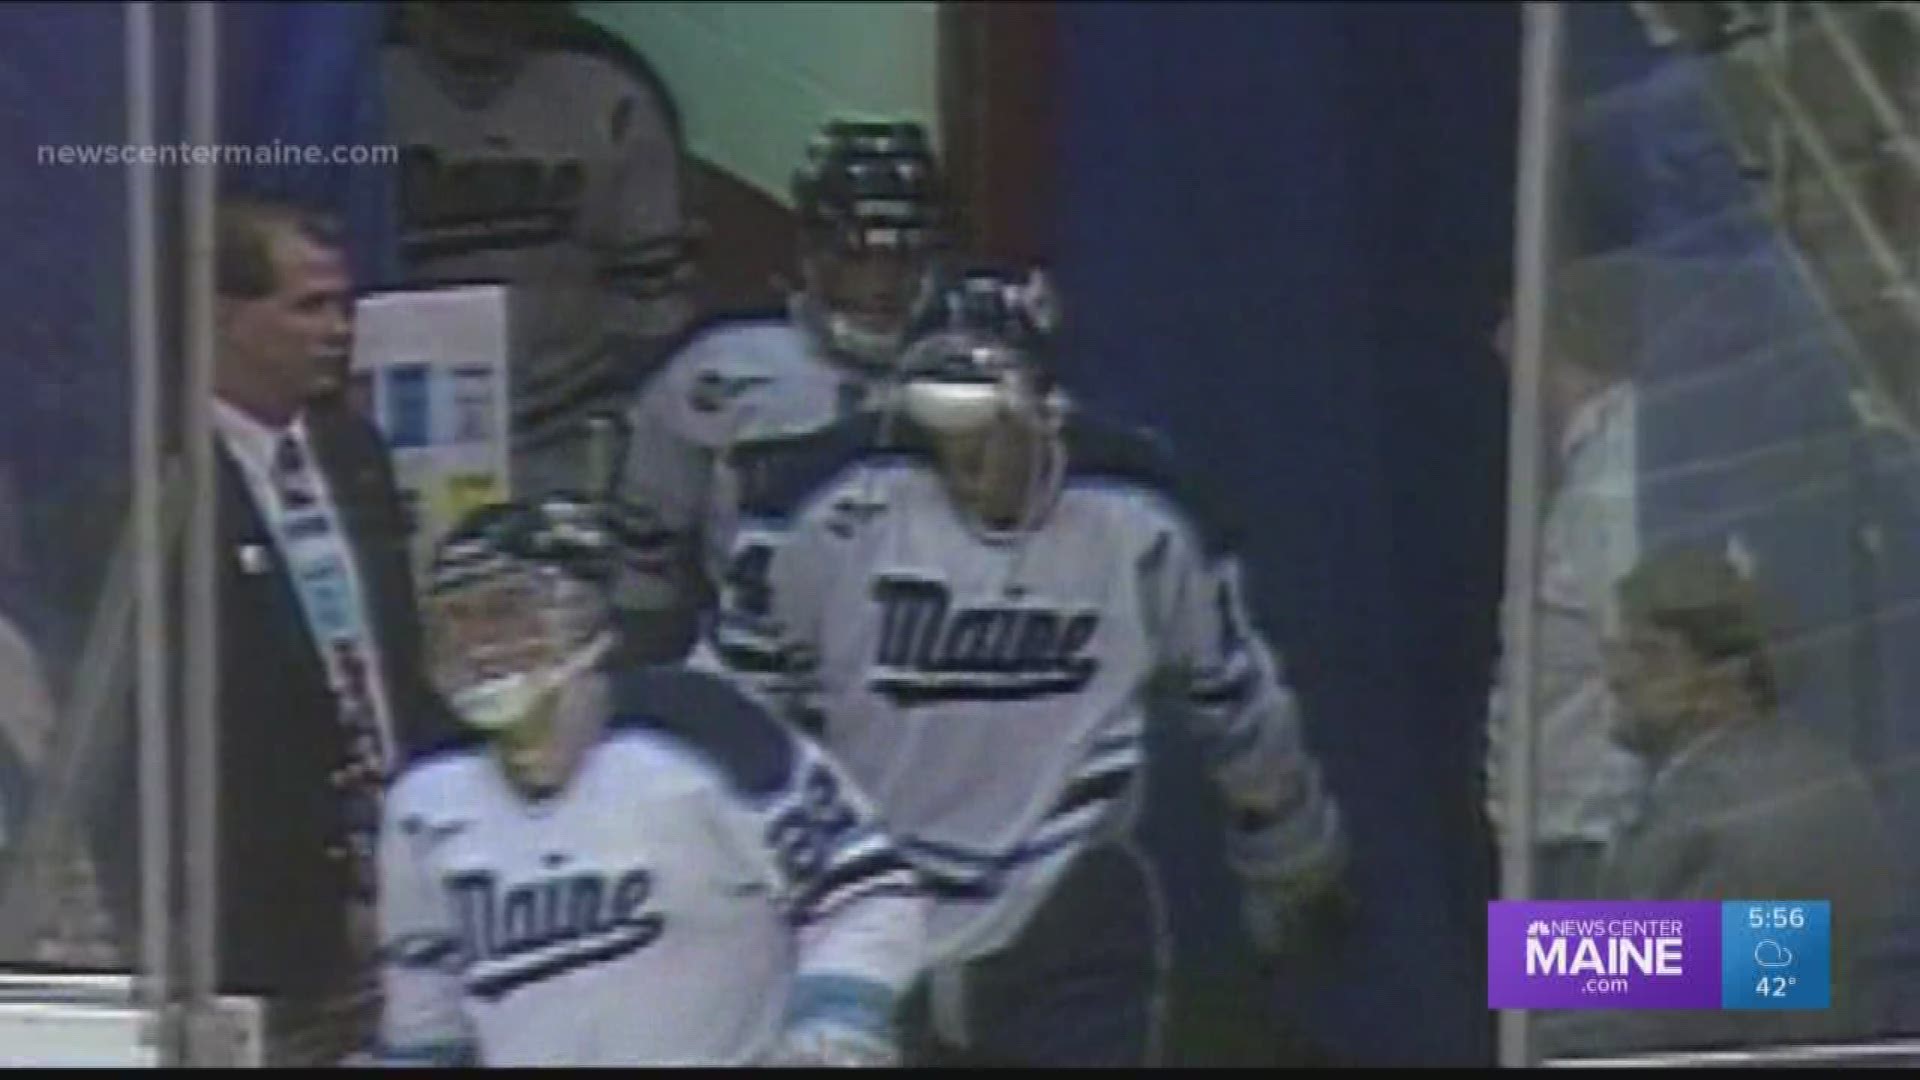 UMaine Hockey championship 25 years ago